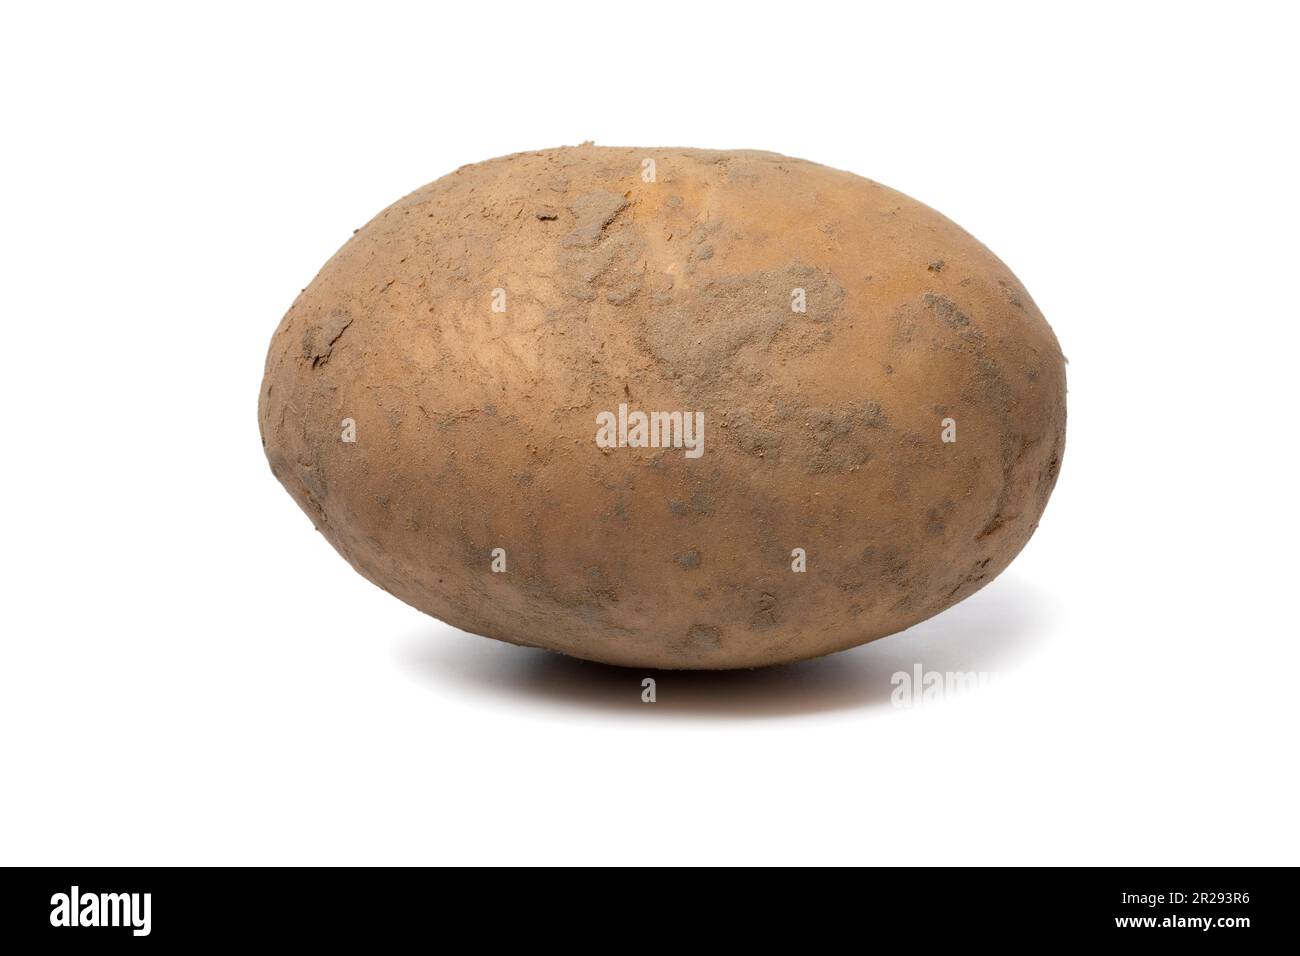 Single fresh Dutch variety potato called Bintje close up isolated on white background Stock Photo